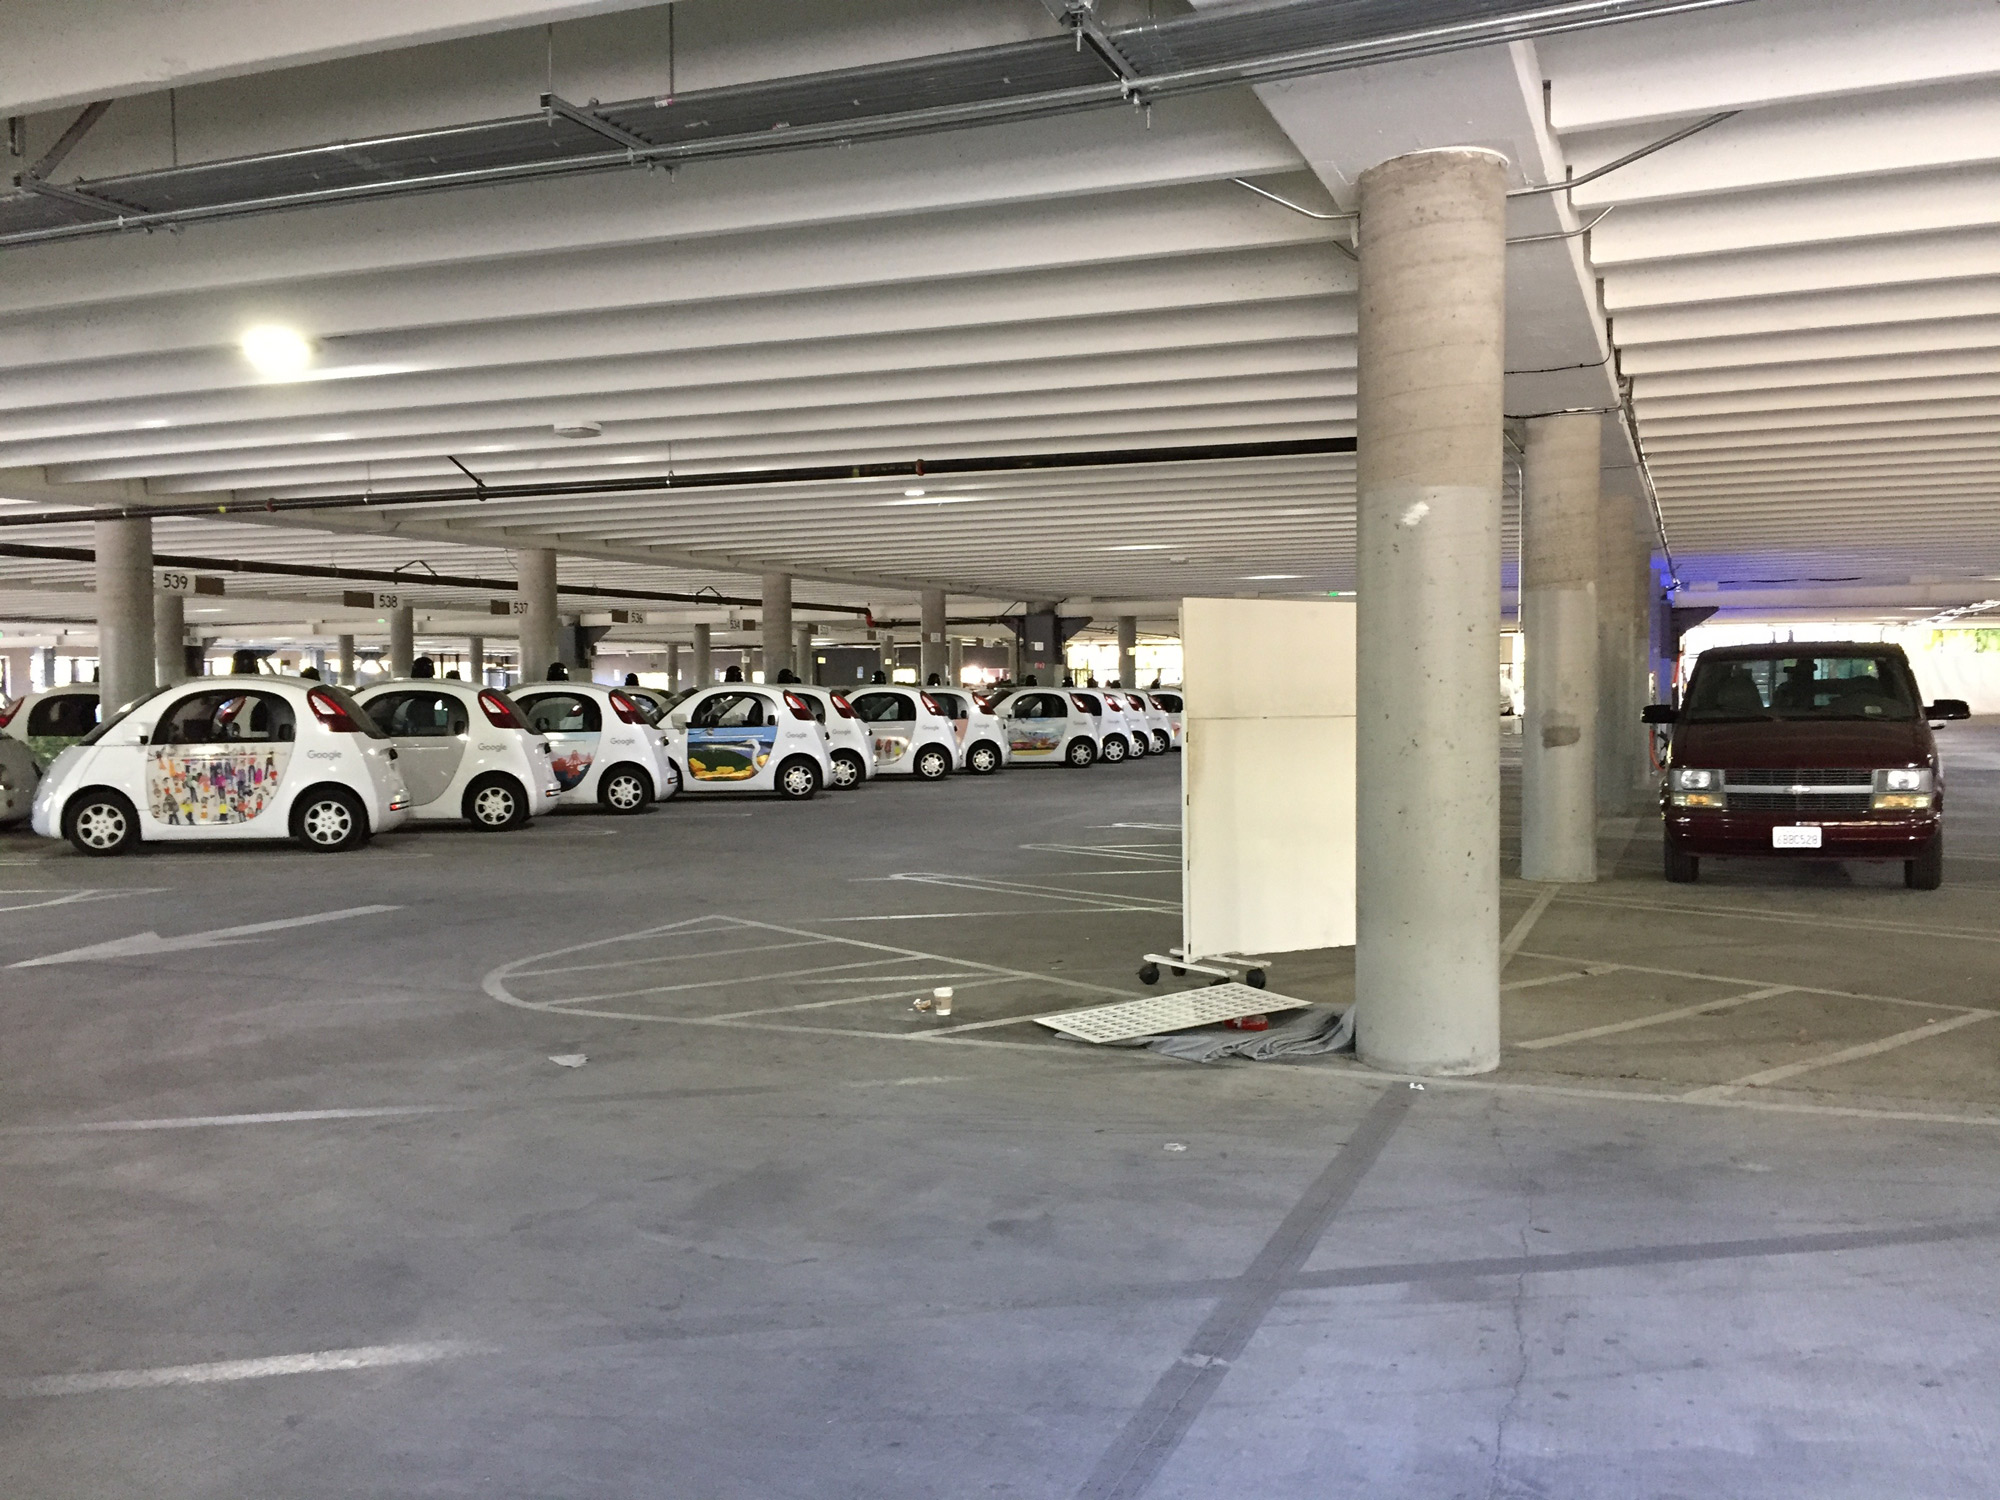 Google self-driving cars fleet